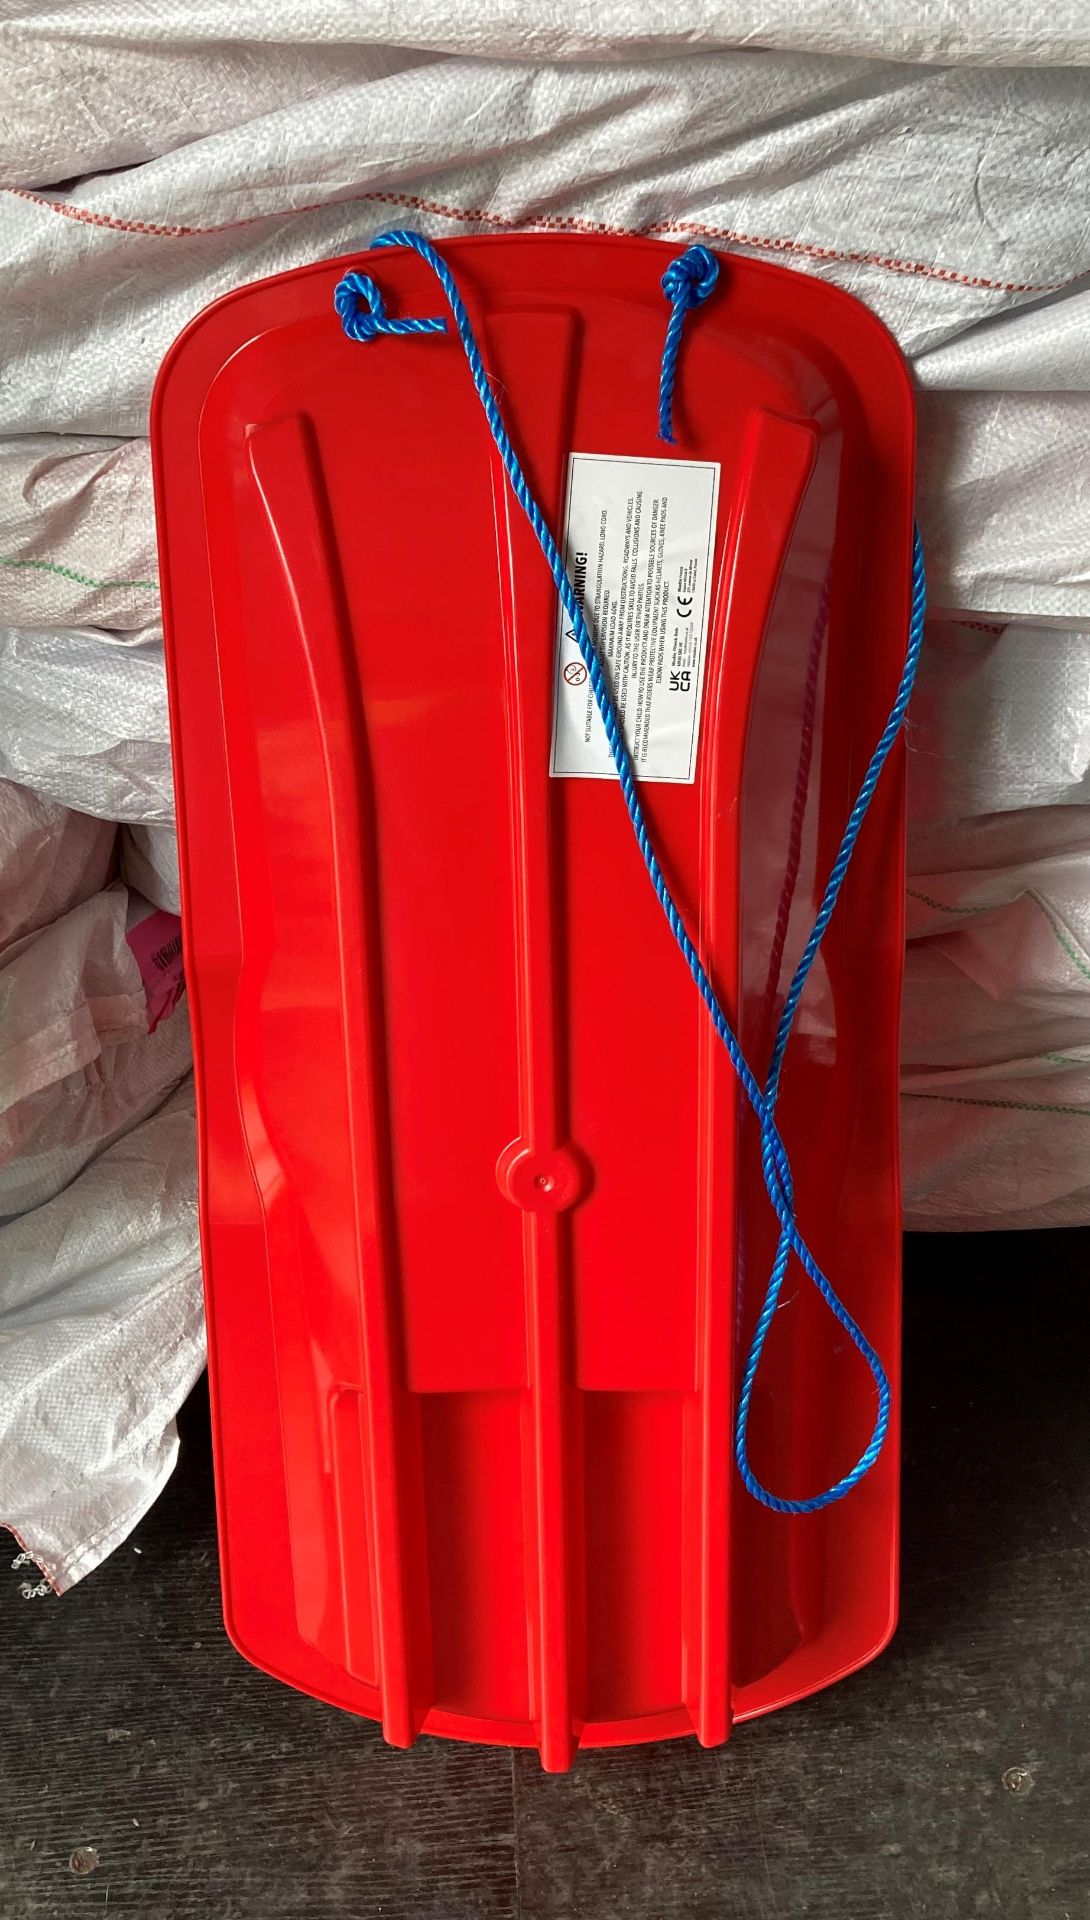 20 x Asra Alpha children's sledges - red (2 x sacks) (saleroom location: container 9) - Image 2 of 4